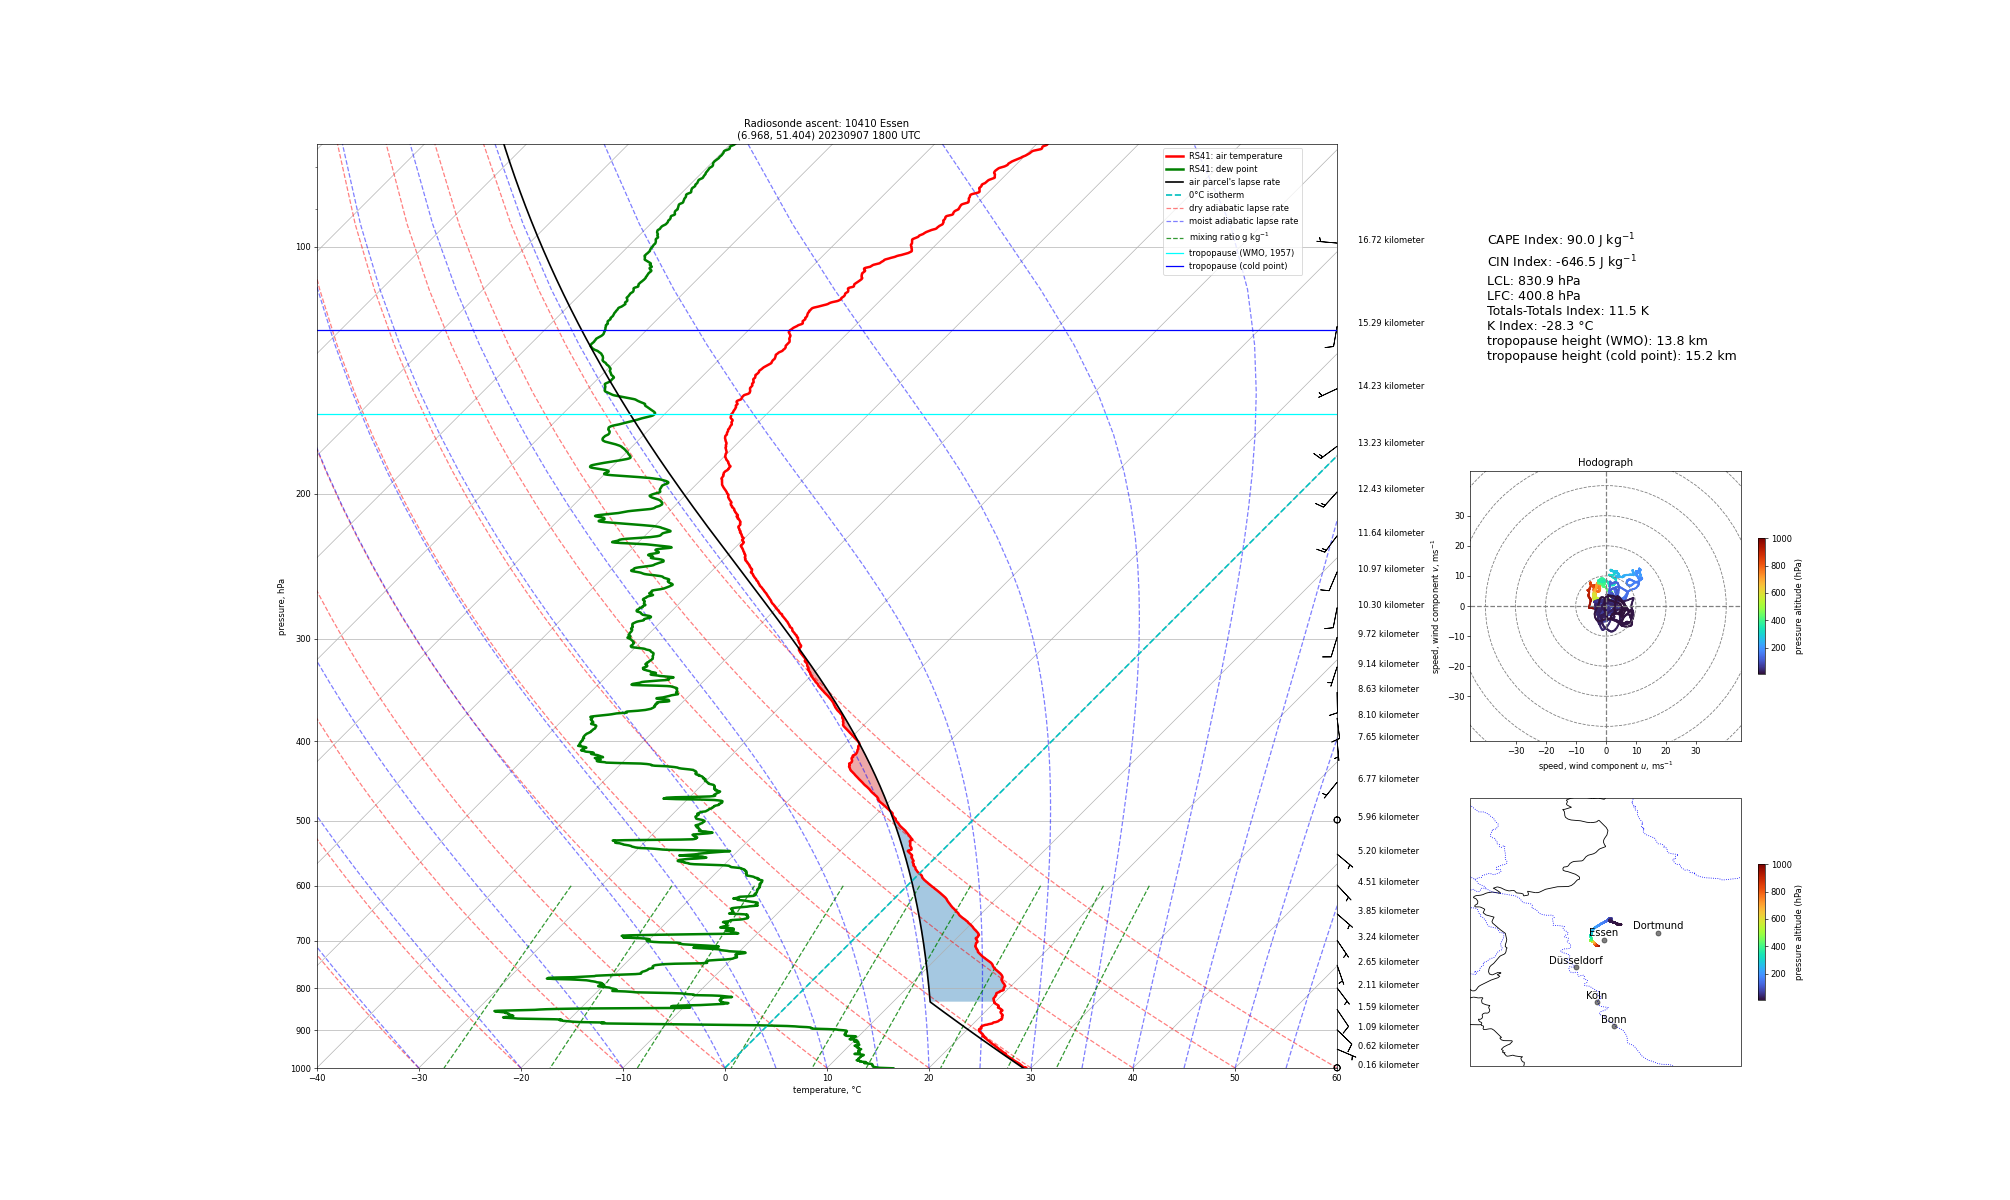 Visualisation of the radiosounding profile at Essen at 1800 UTC